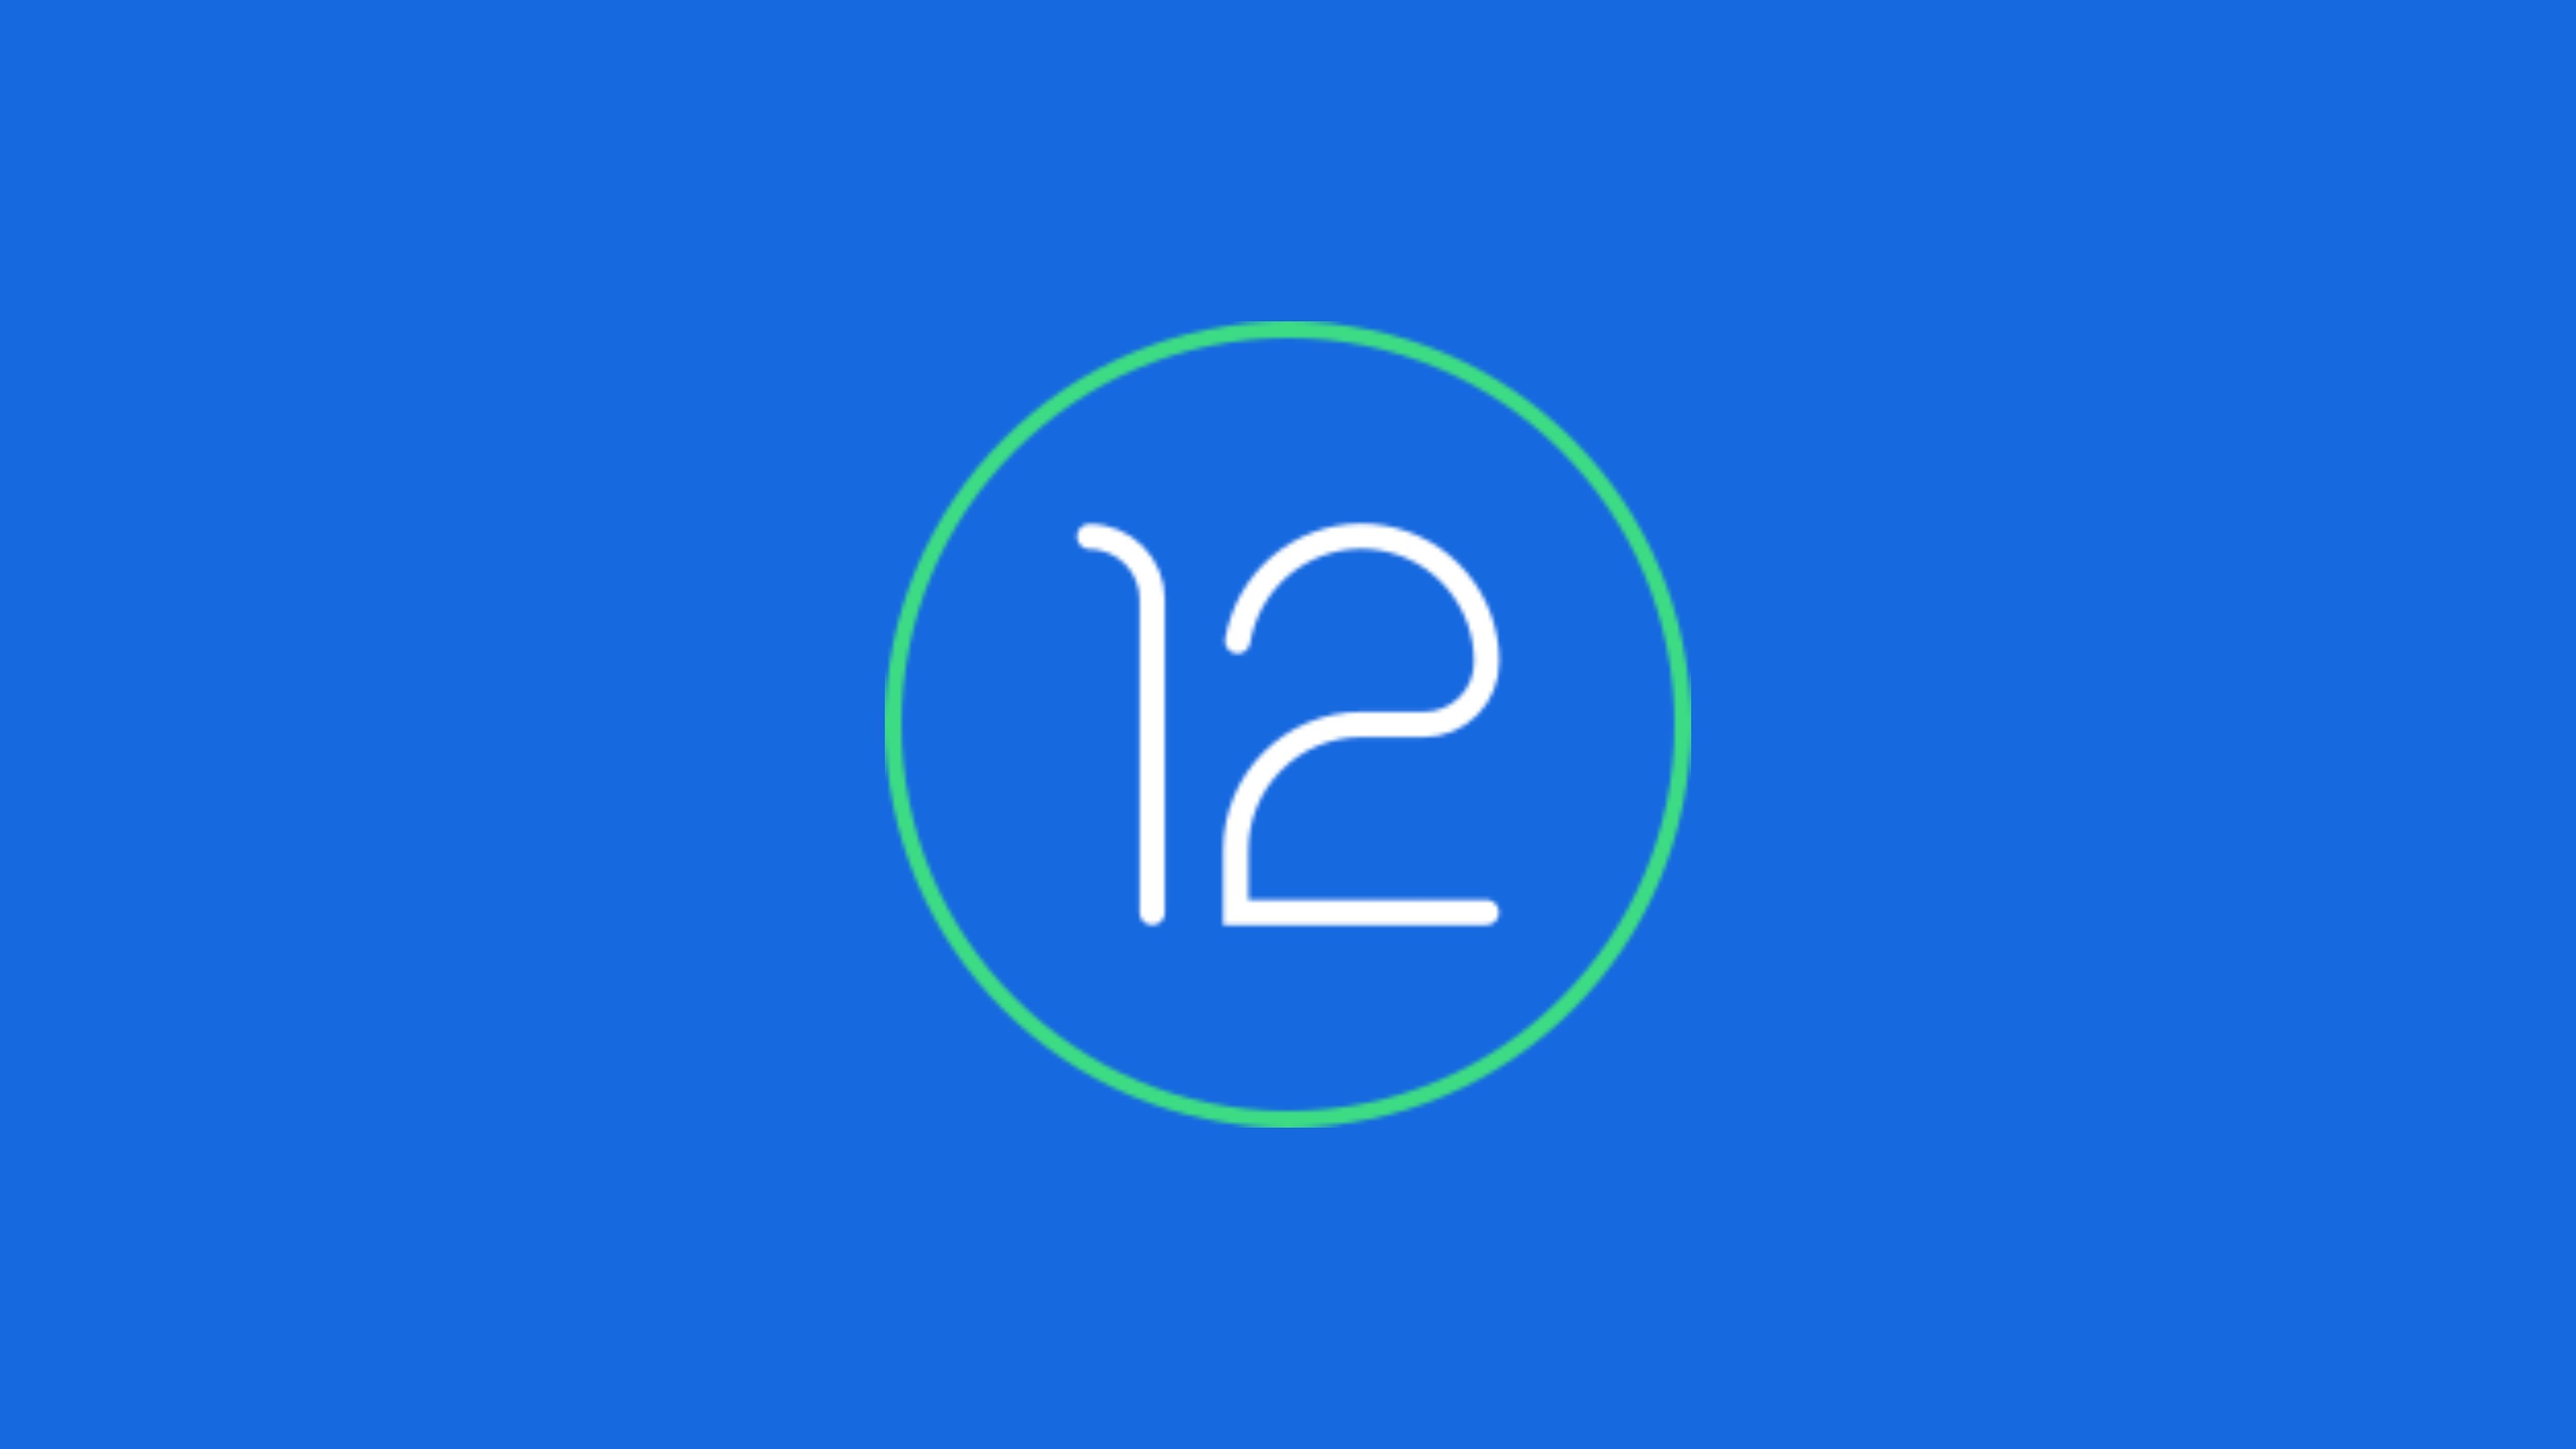 Андрой 12. Андроид 12. Android 12 logo. Google Android 12. Android 12 Wallpaper.